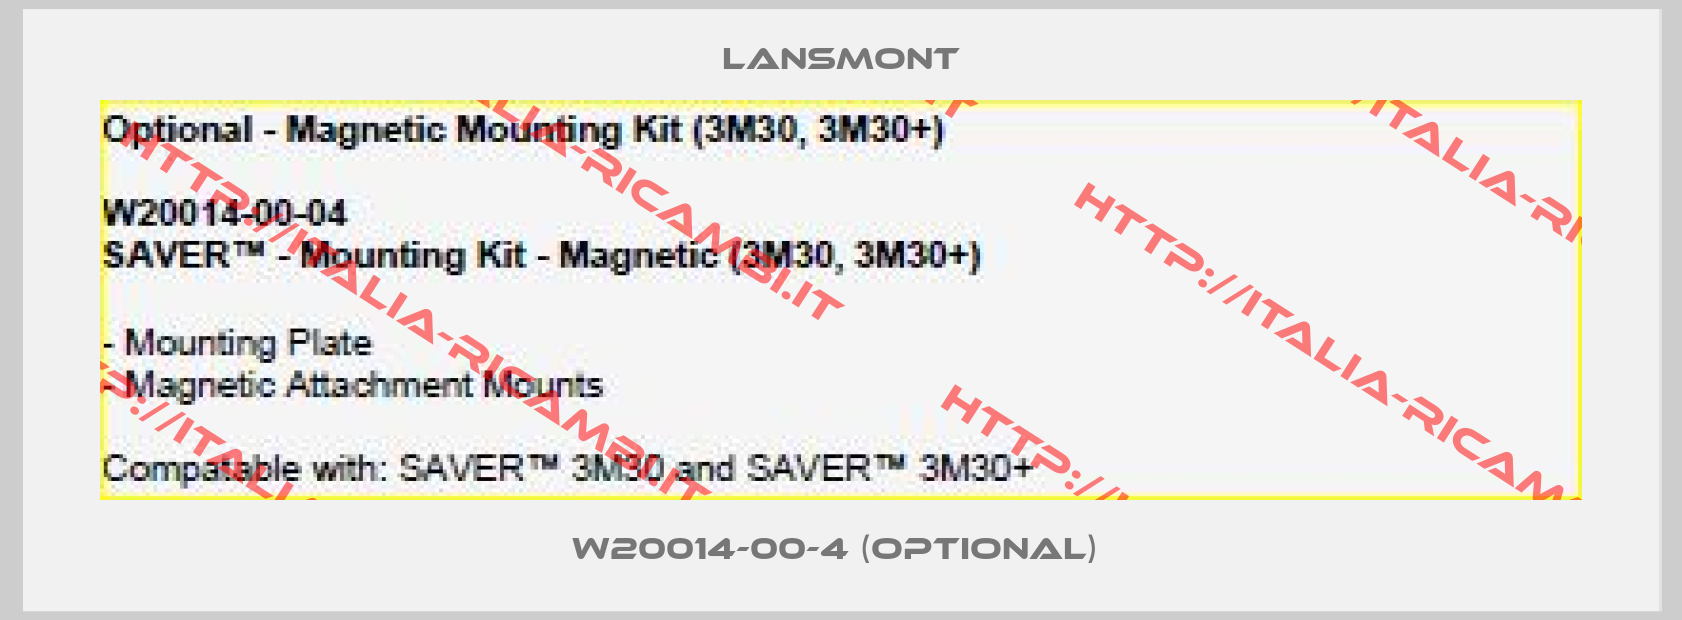 Lansmont-W20014-00-4 (optional) 